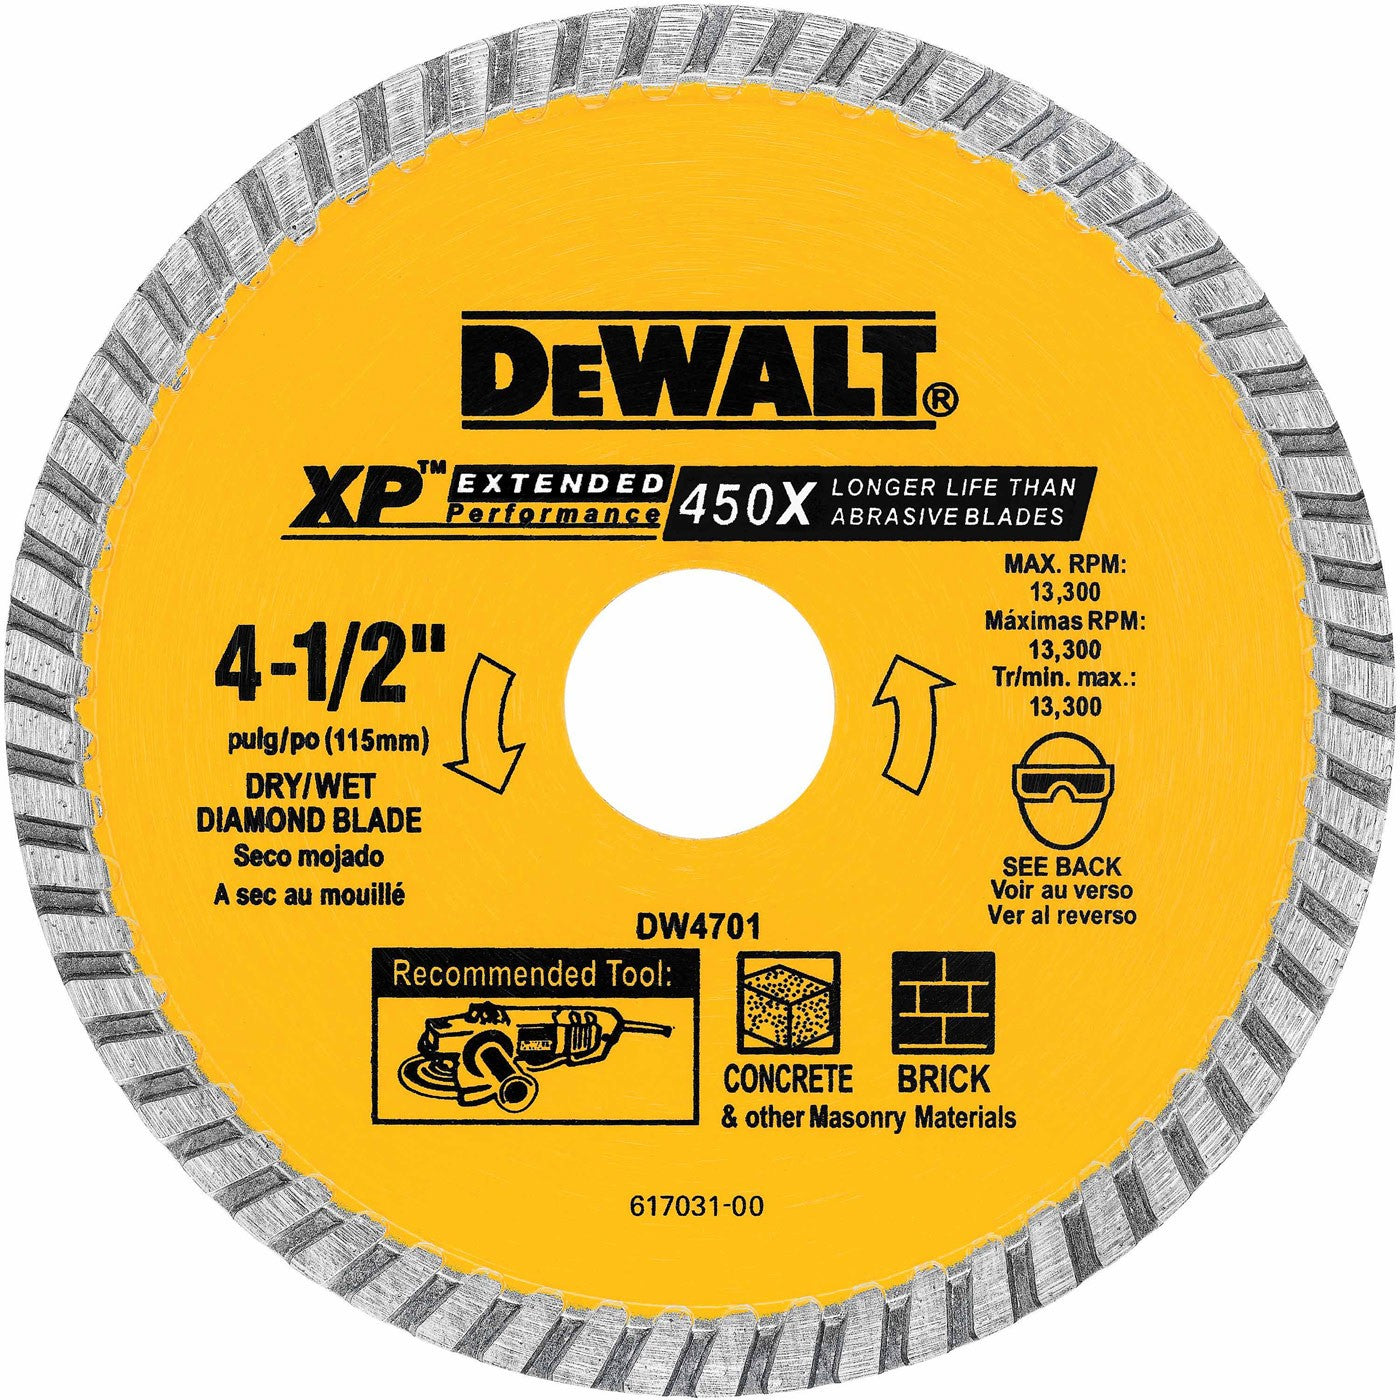 DeWalt DW4701 4-1/2" Continuous Rim Industrial Dry/Wet Diamond Blade